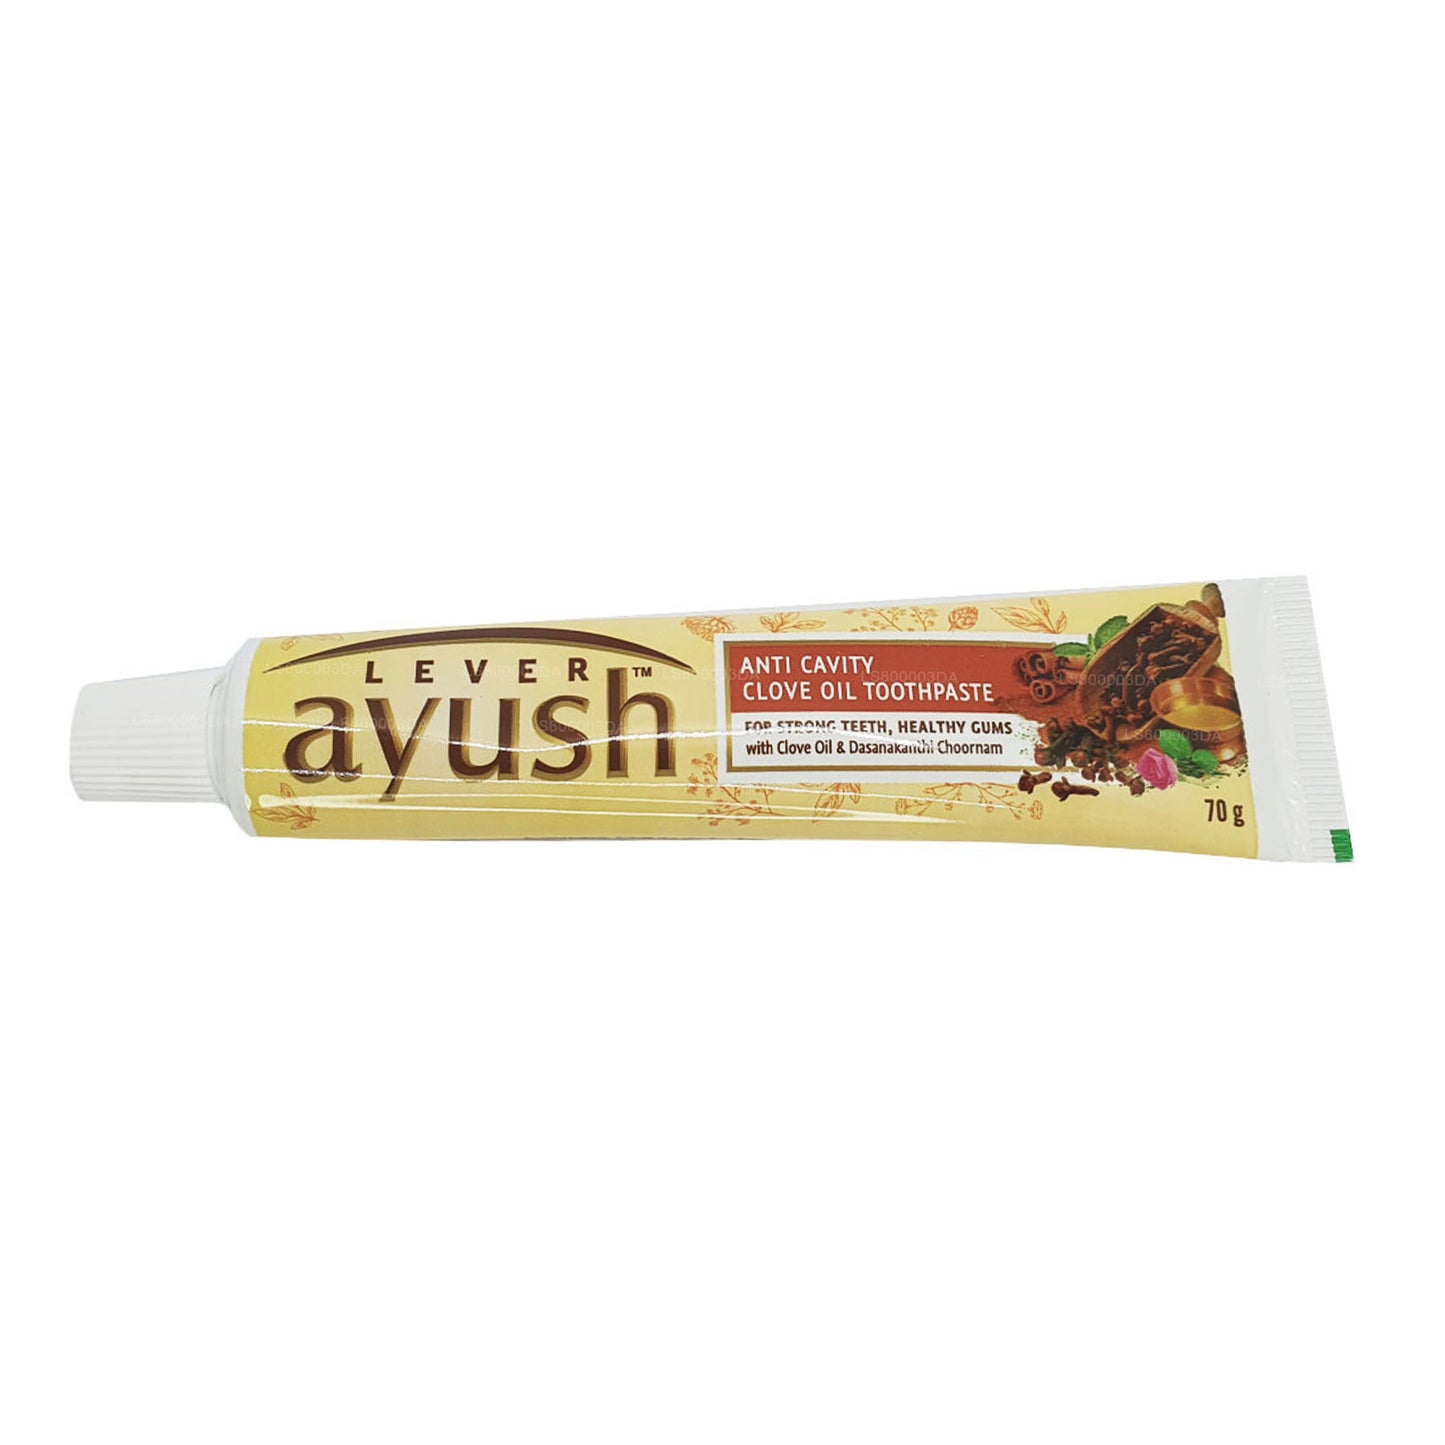 Ayush Anti Cavity Clove Oil Toothpaste